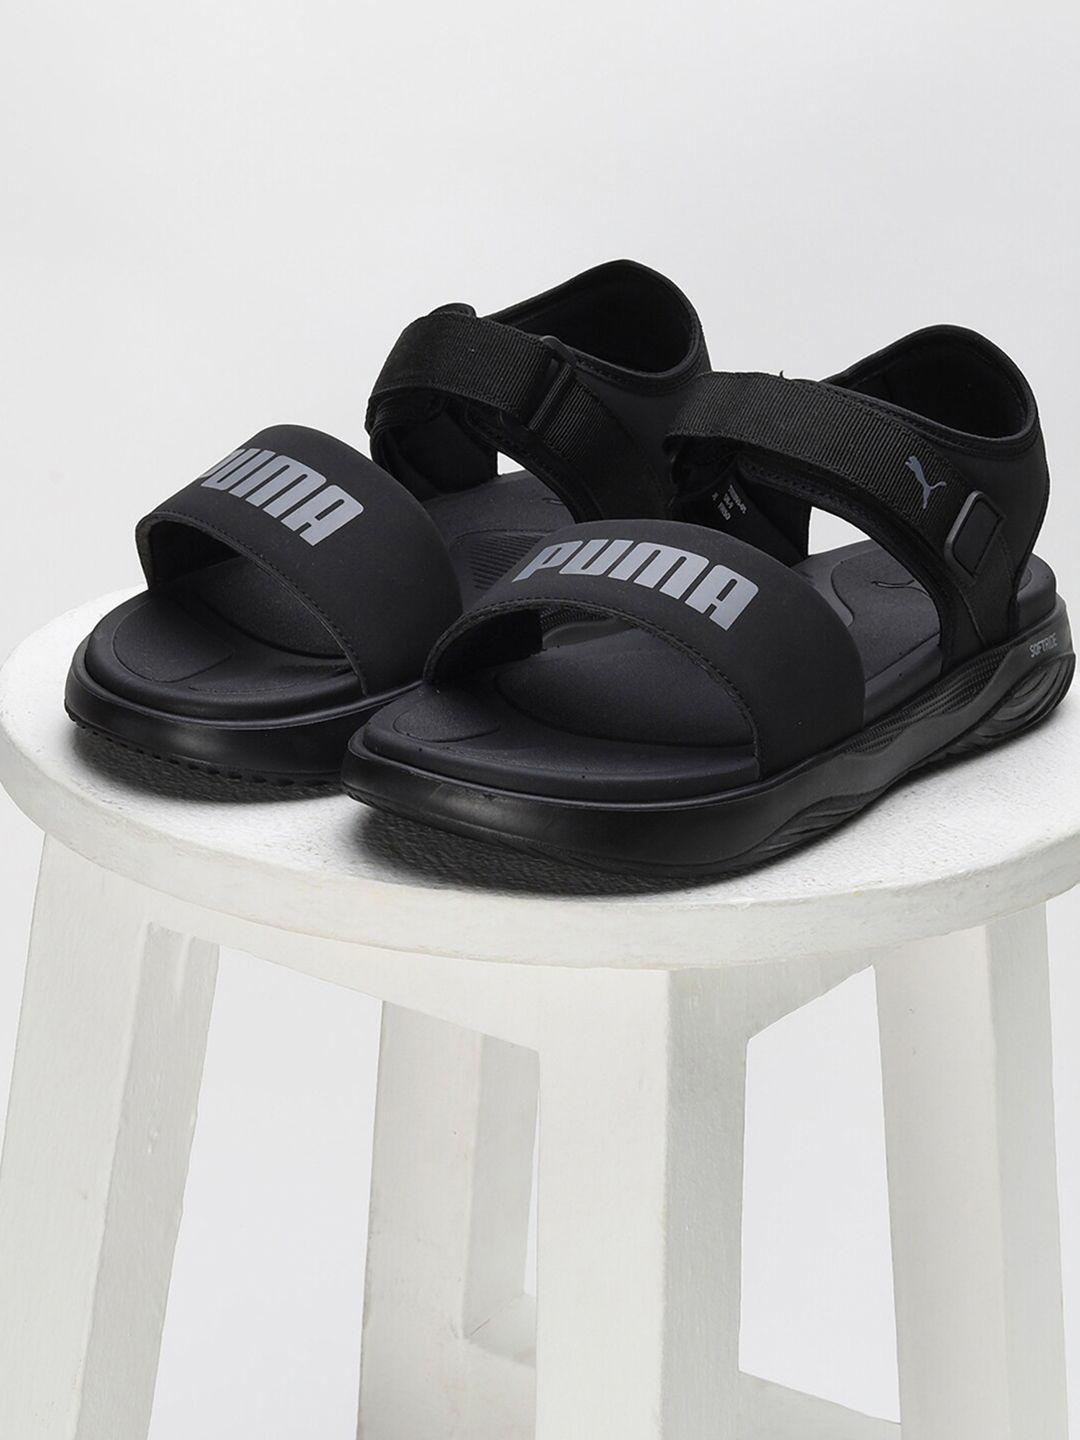 puma brand logo printed softride seave sandals